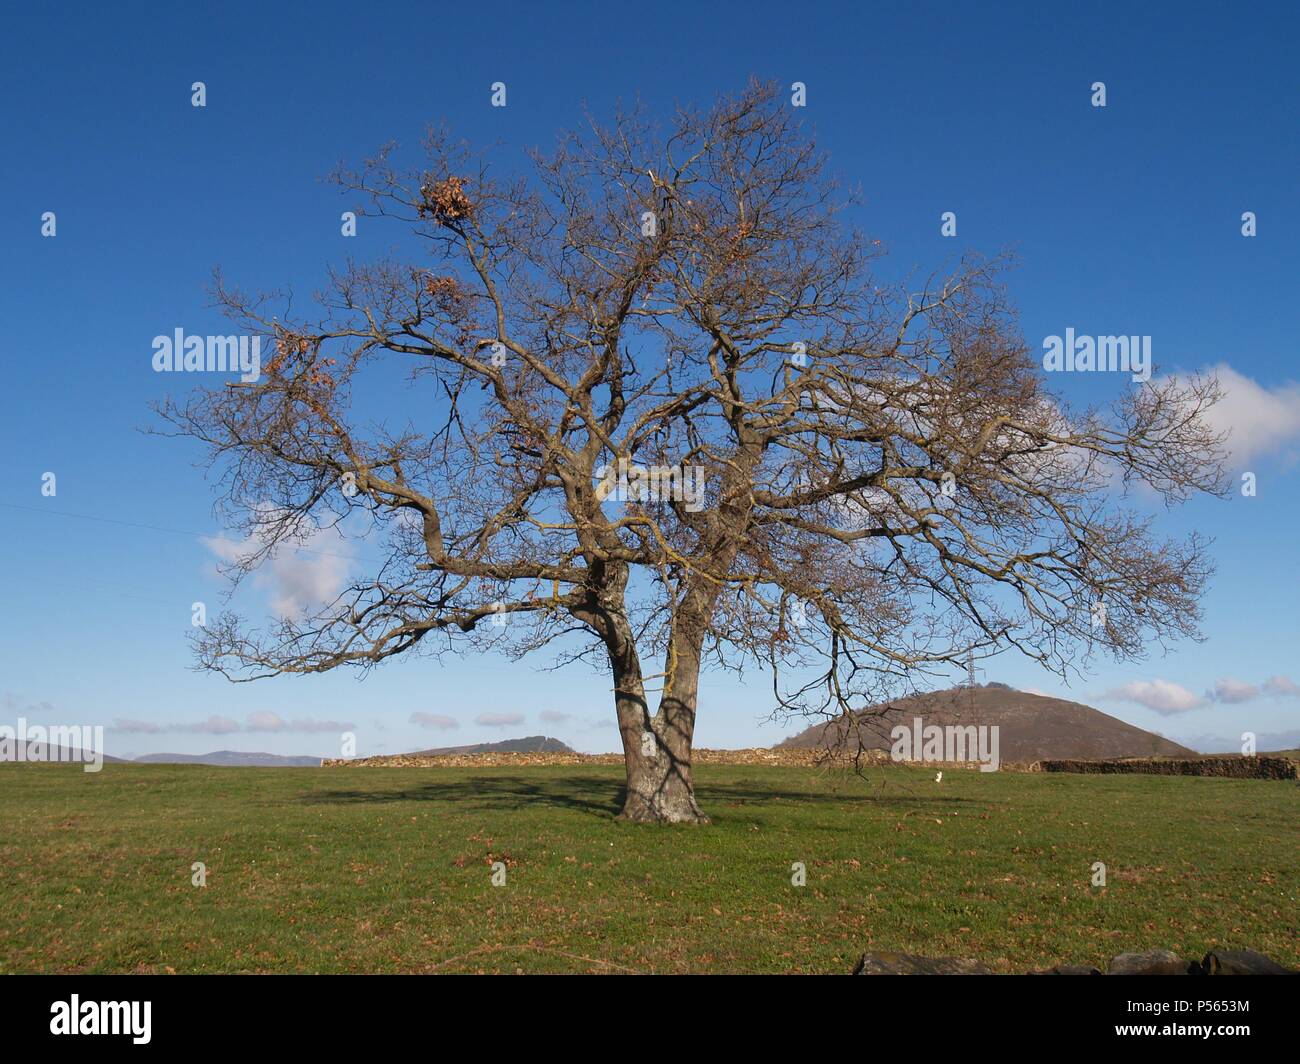 ROBLE ALBAR. (Quercus petraea). Arbol de la familia de las fagáceas. Stock Photo